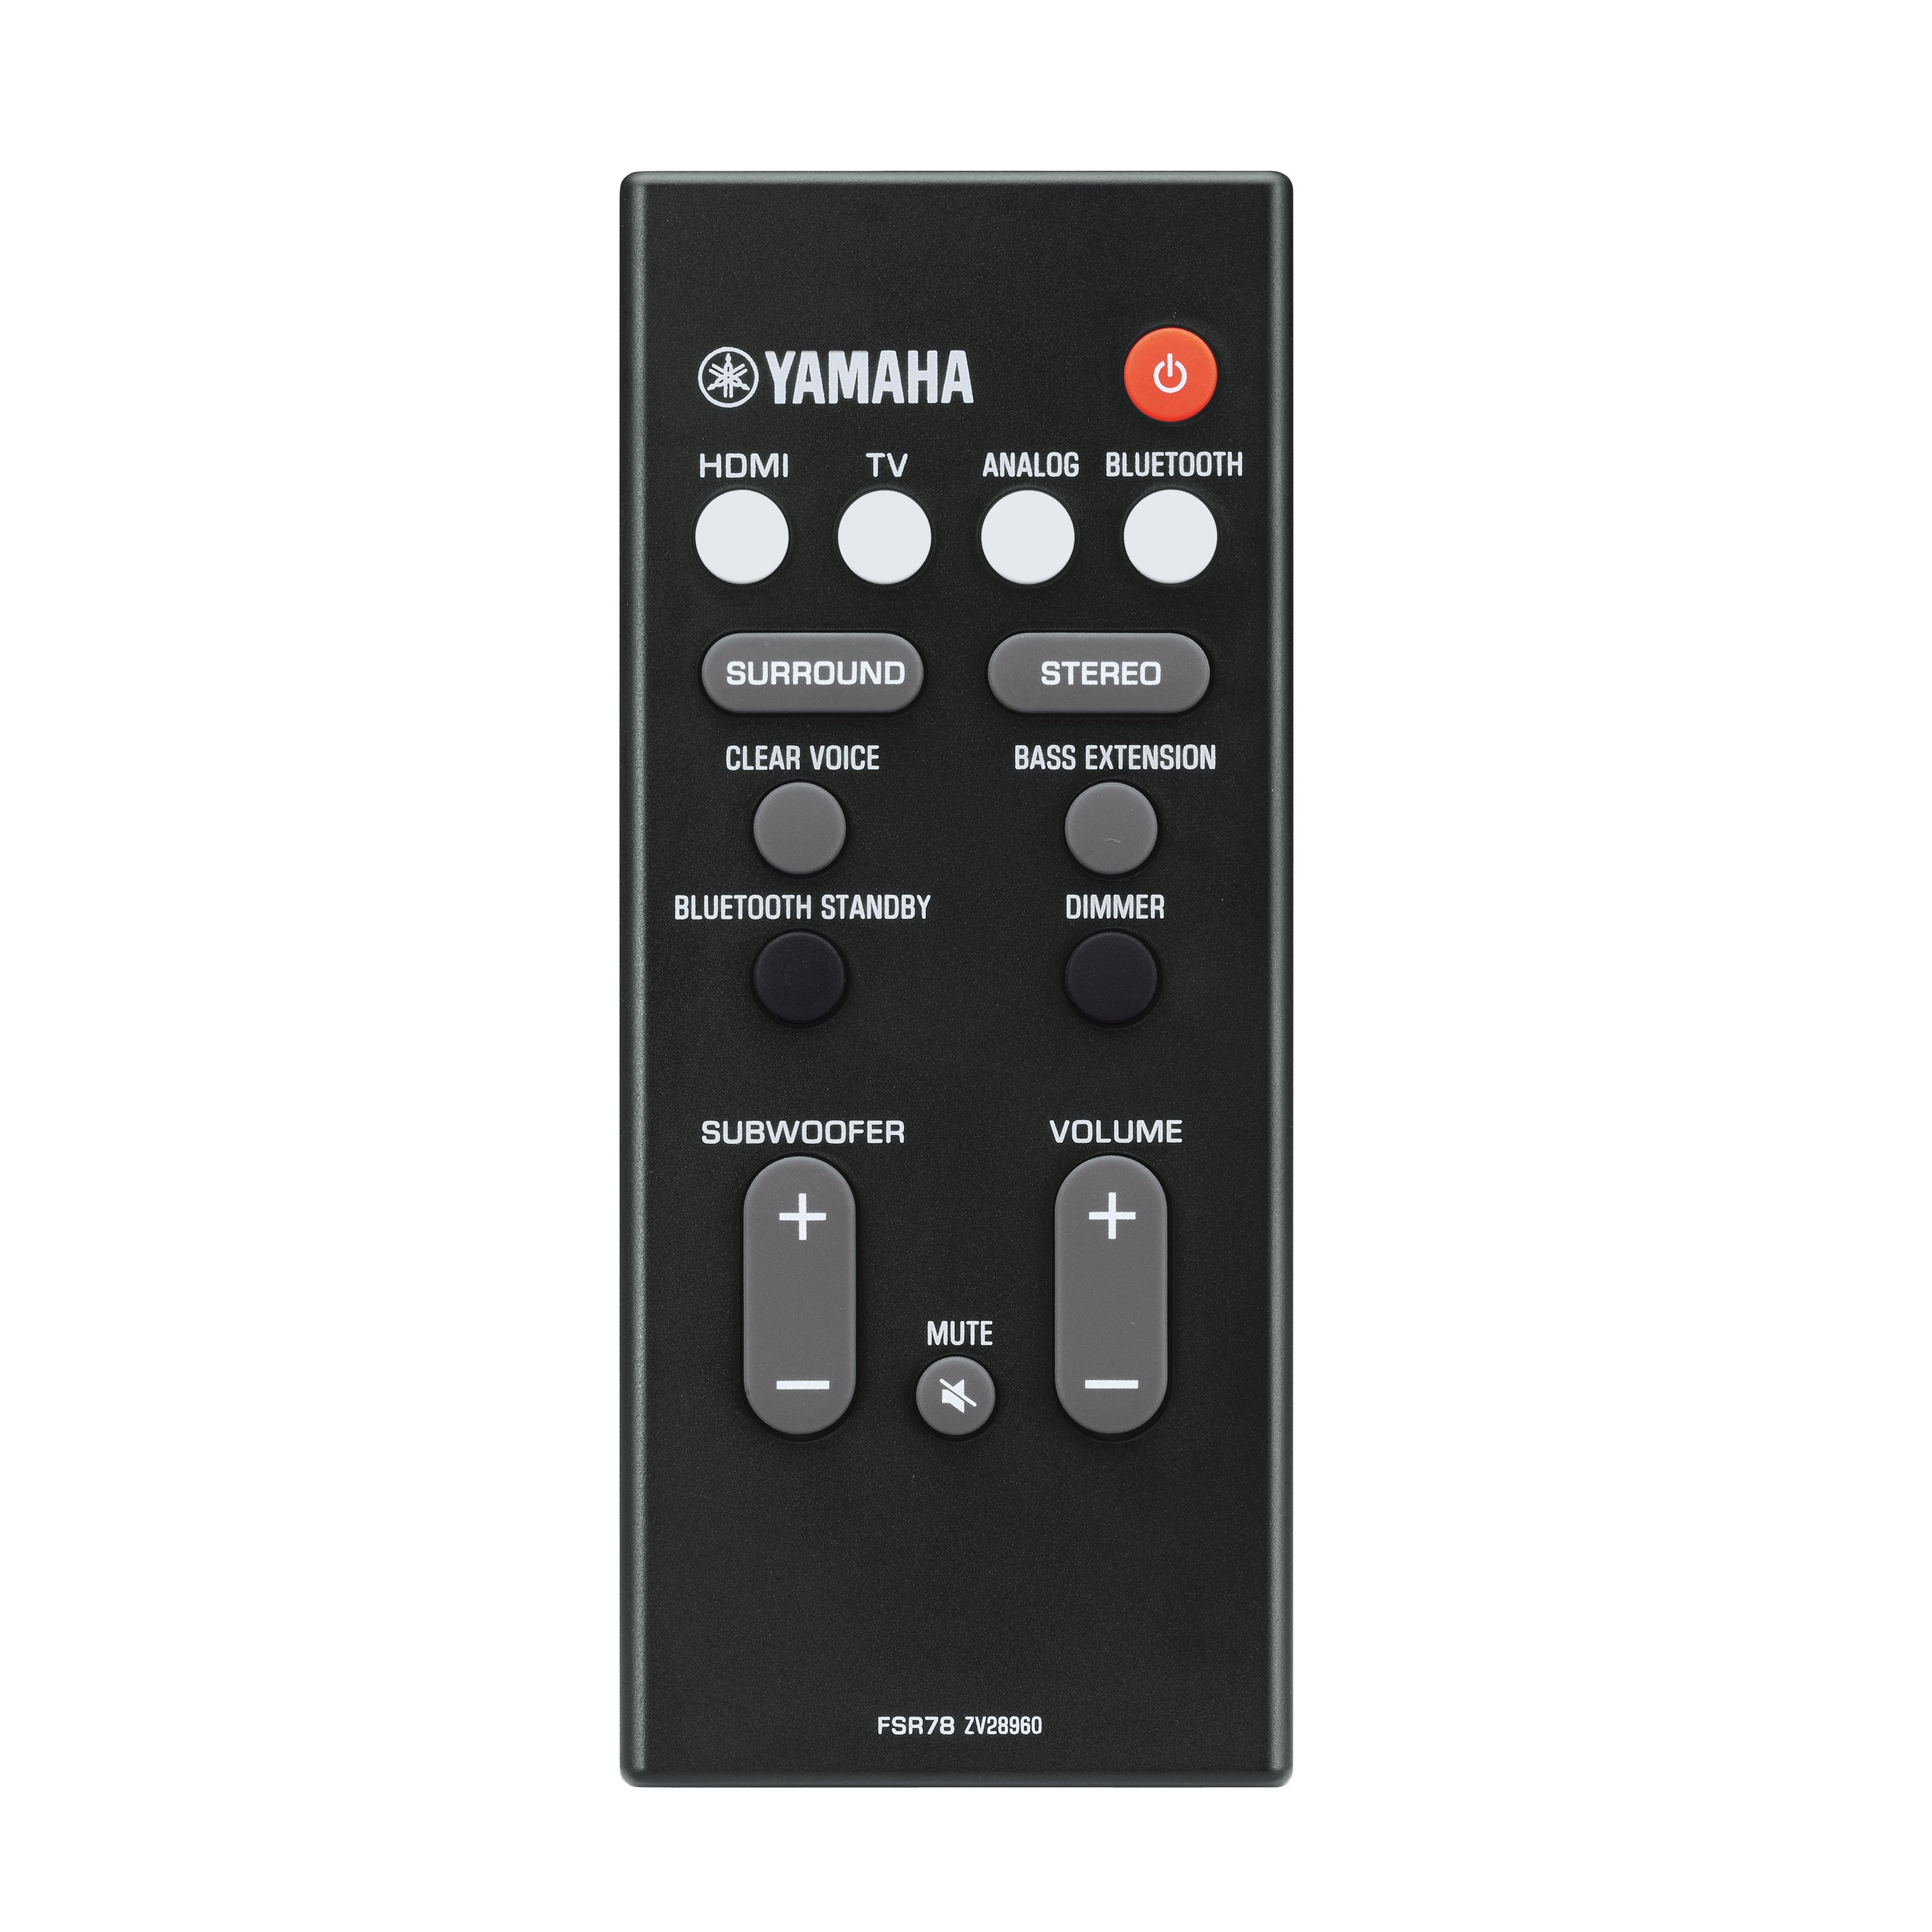 Yamaha YAS-207 Sound Bar with Wireless Subwoofer 